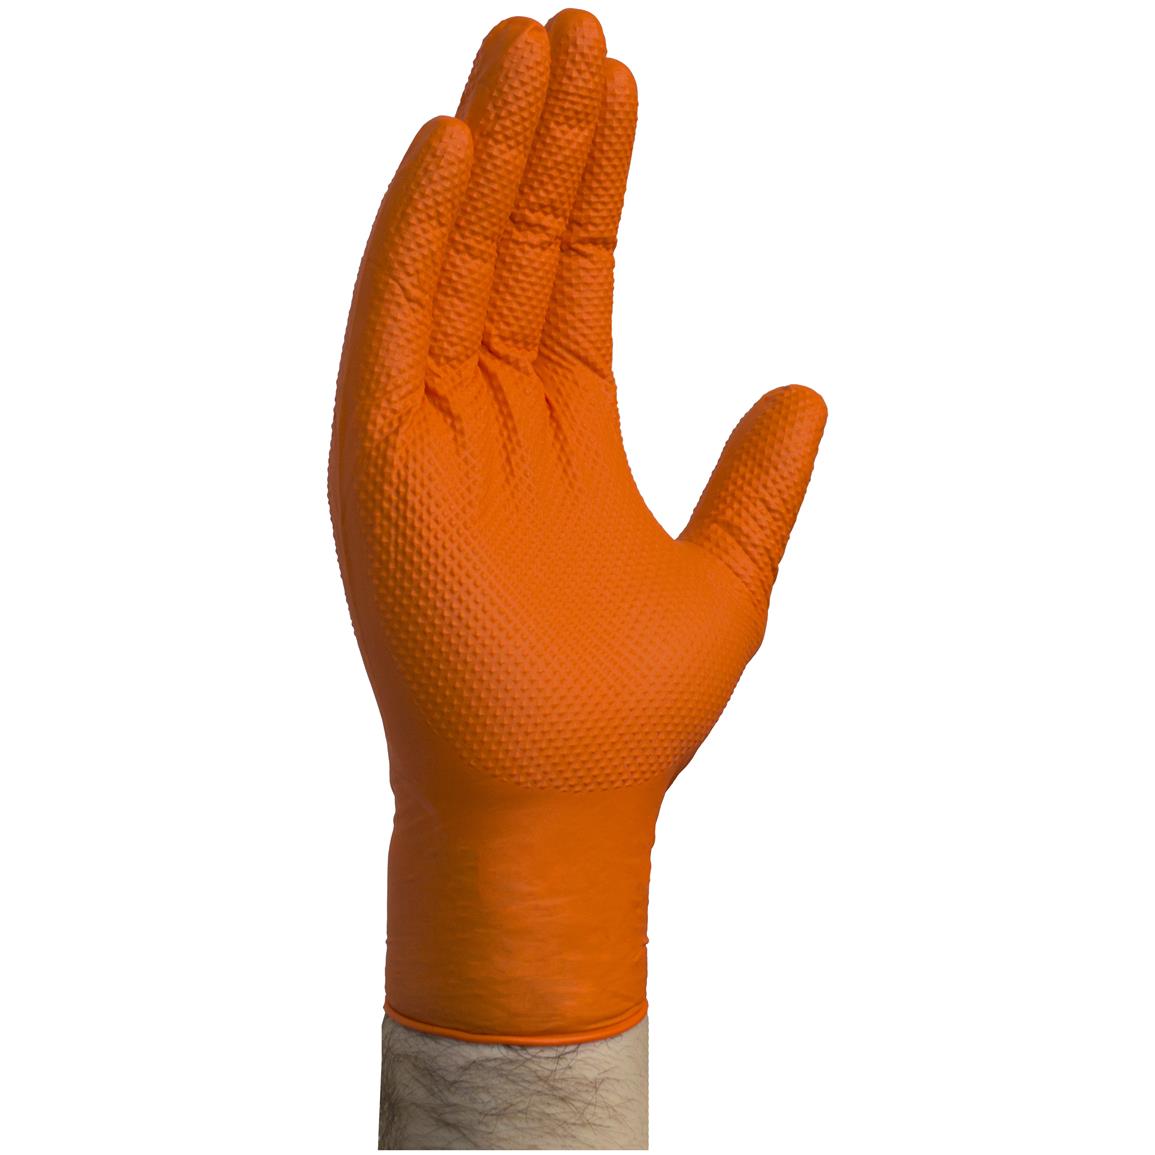 GloveWorks Heavy Duty Orange Nitrile Gloves, 100 Pack